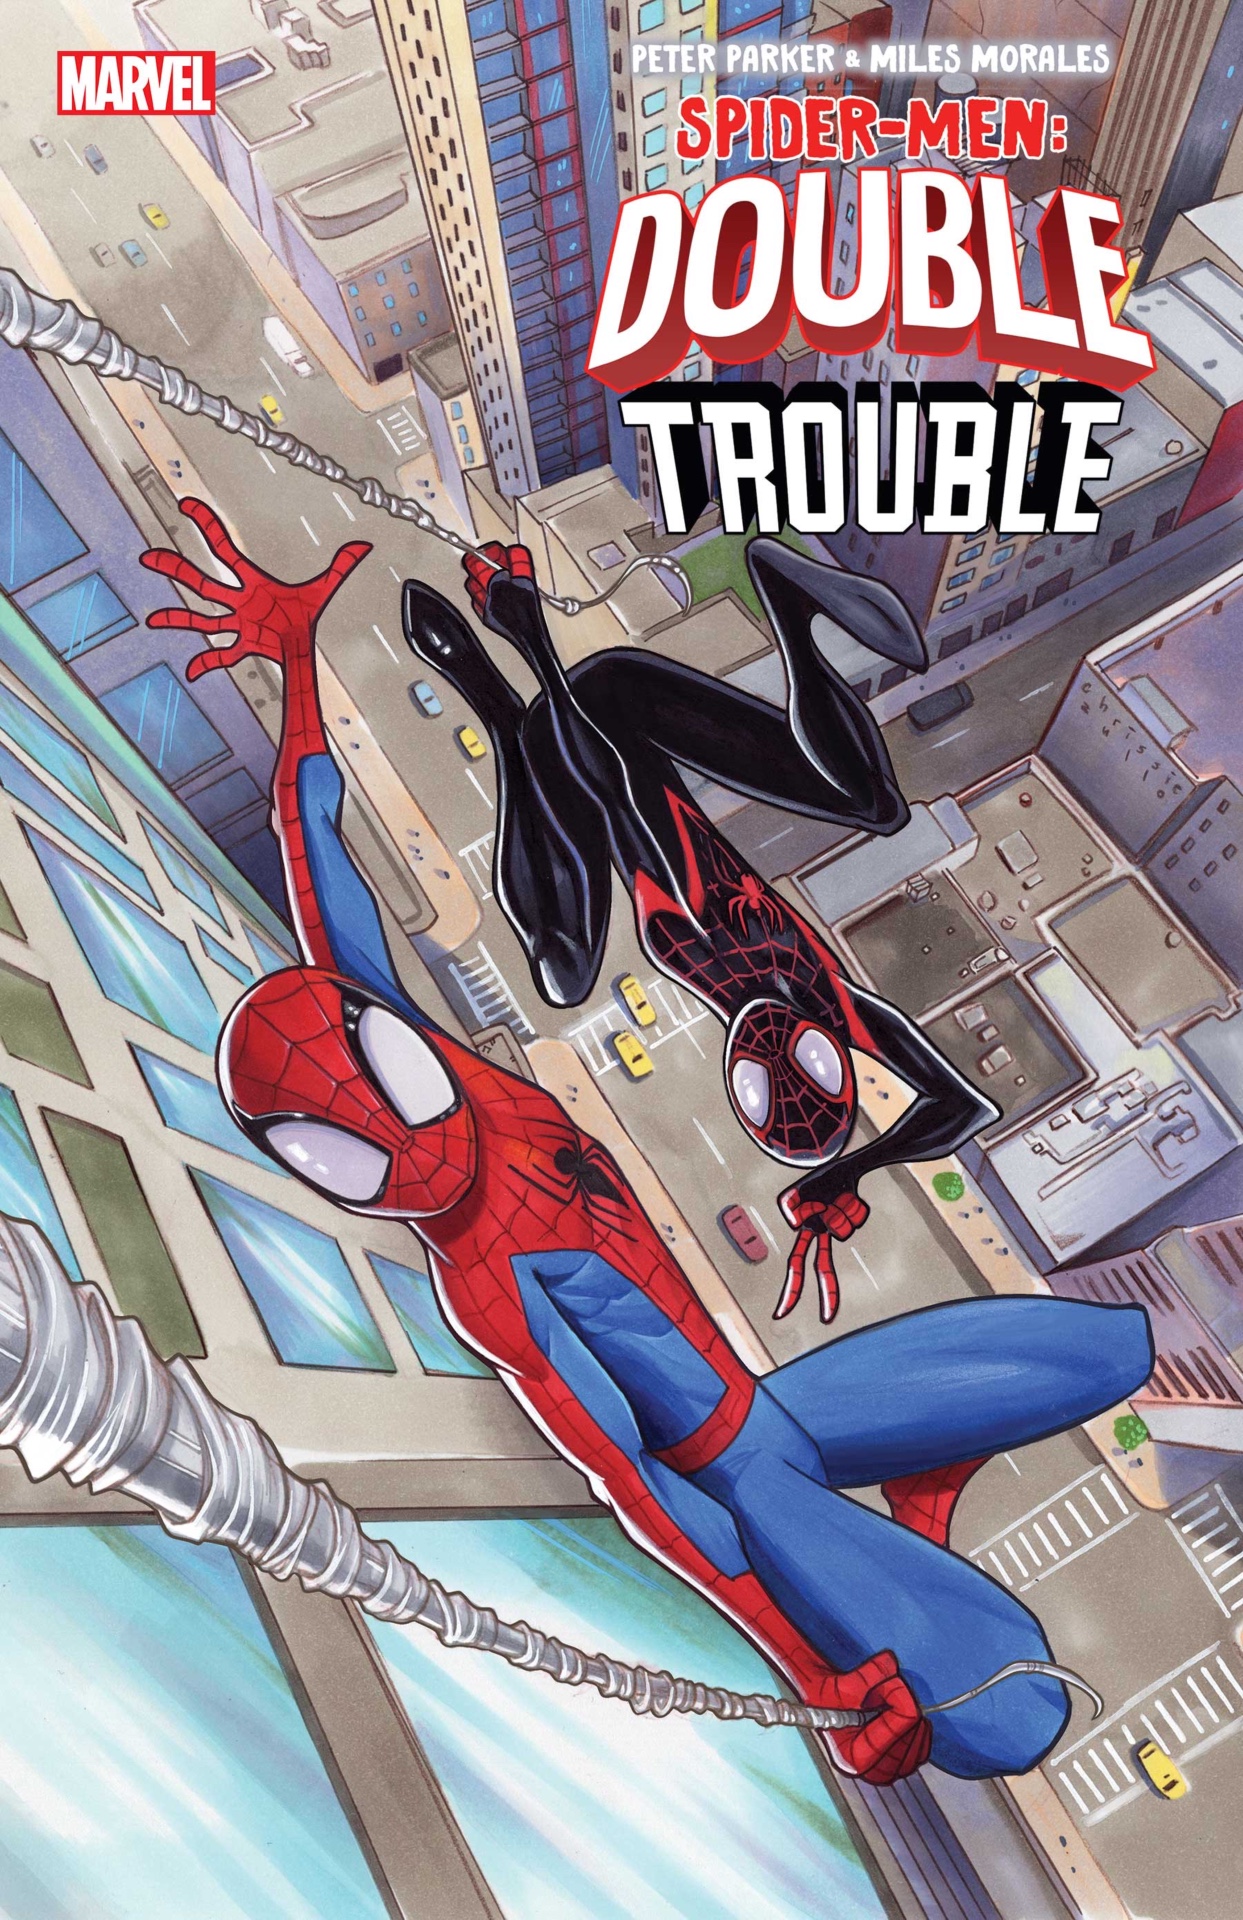 Spider-Man (Miles Morales) Comics, Spider-Man (Miles Morales) Comic Book  List